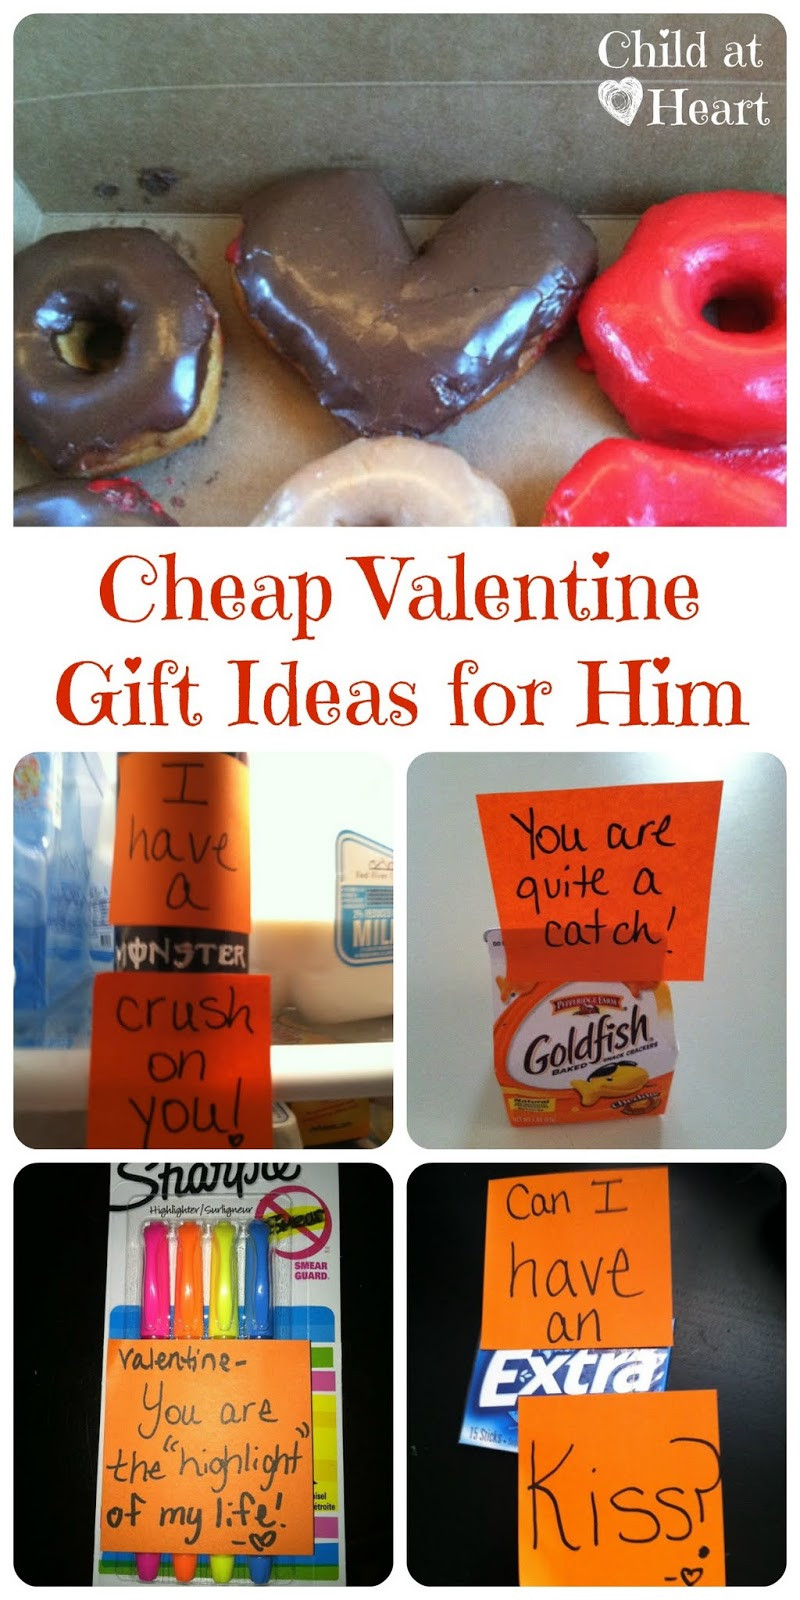 Unique Valentine Day Gift Ideas For Him
 Cheap Valentine Gift Ideas for Him Child at Heart Blog